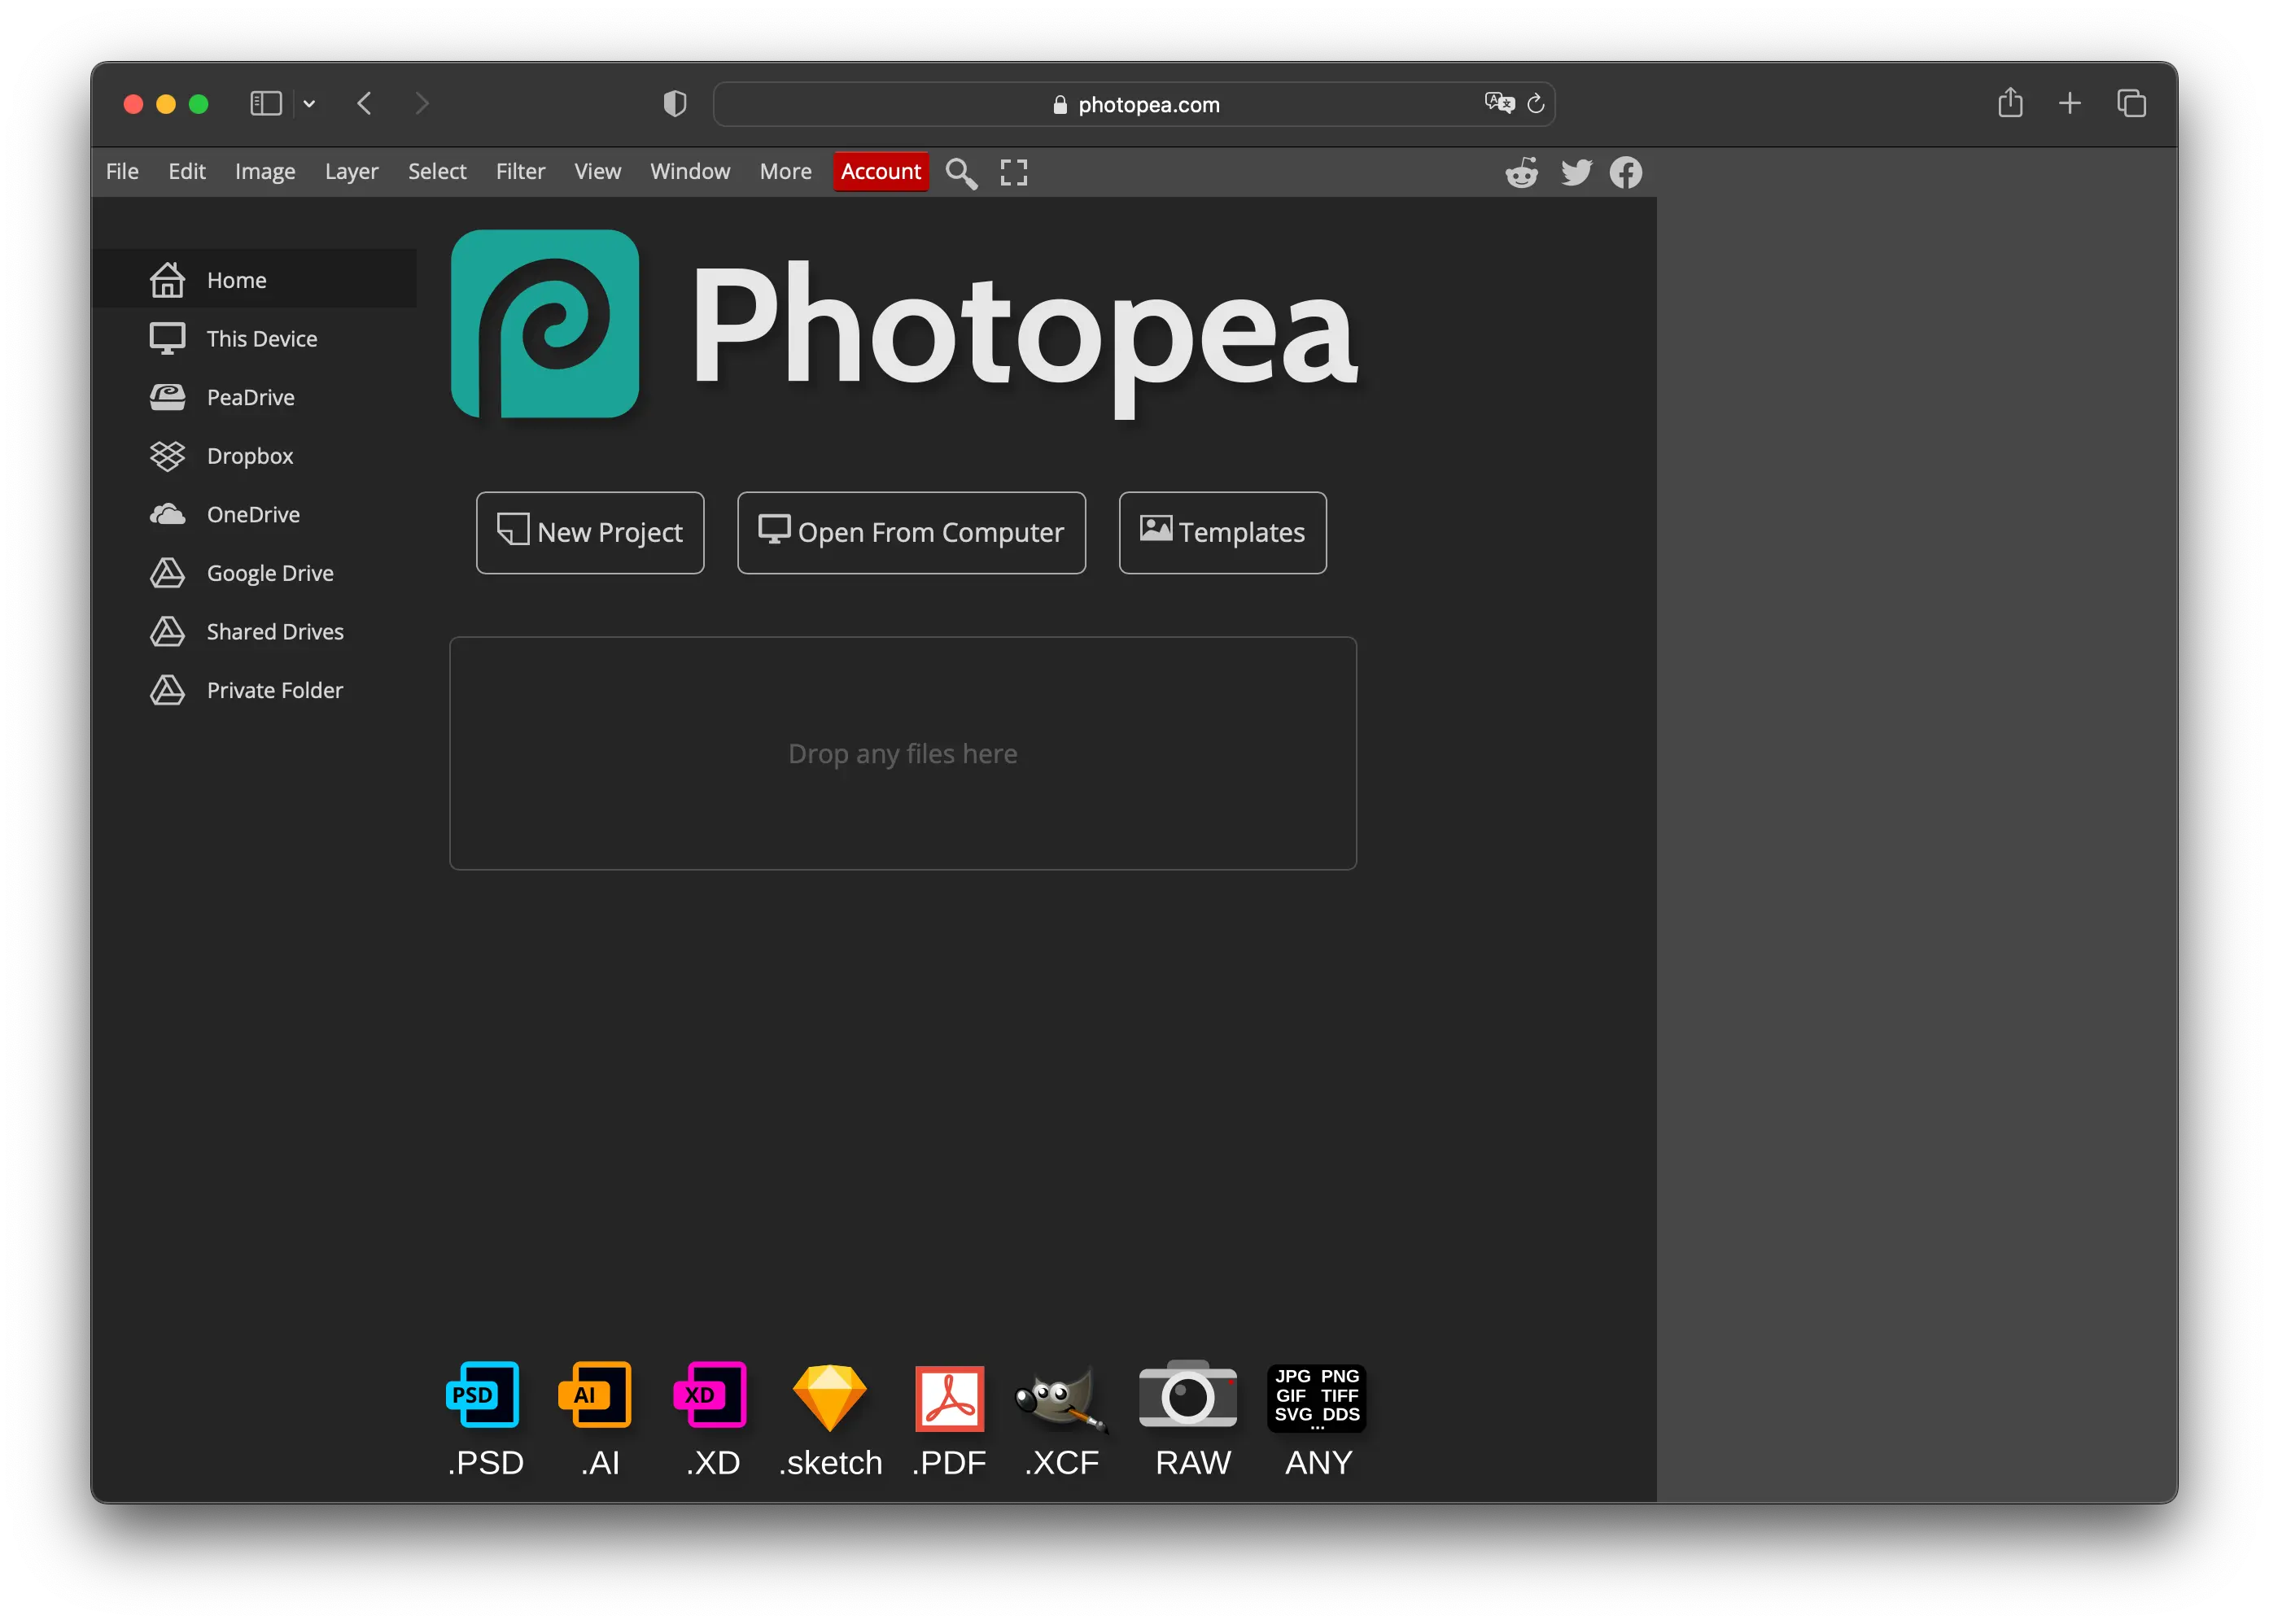 Screenshot of Photopea interface